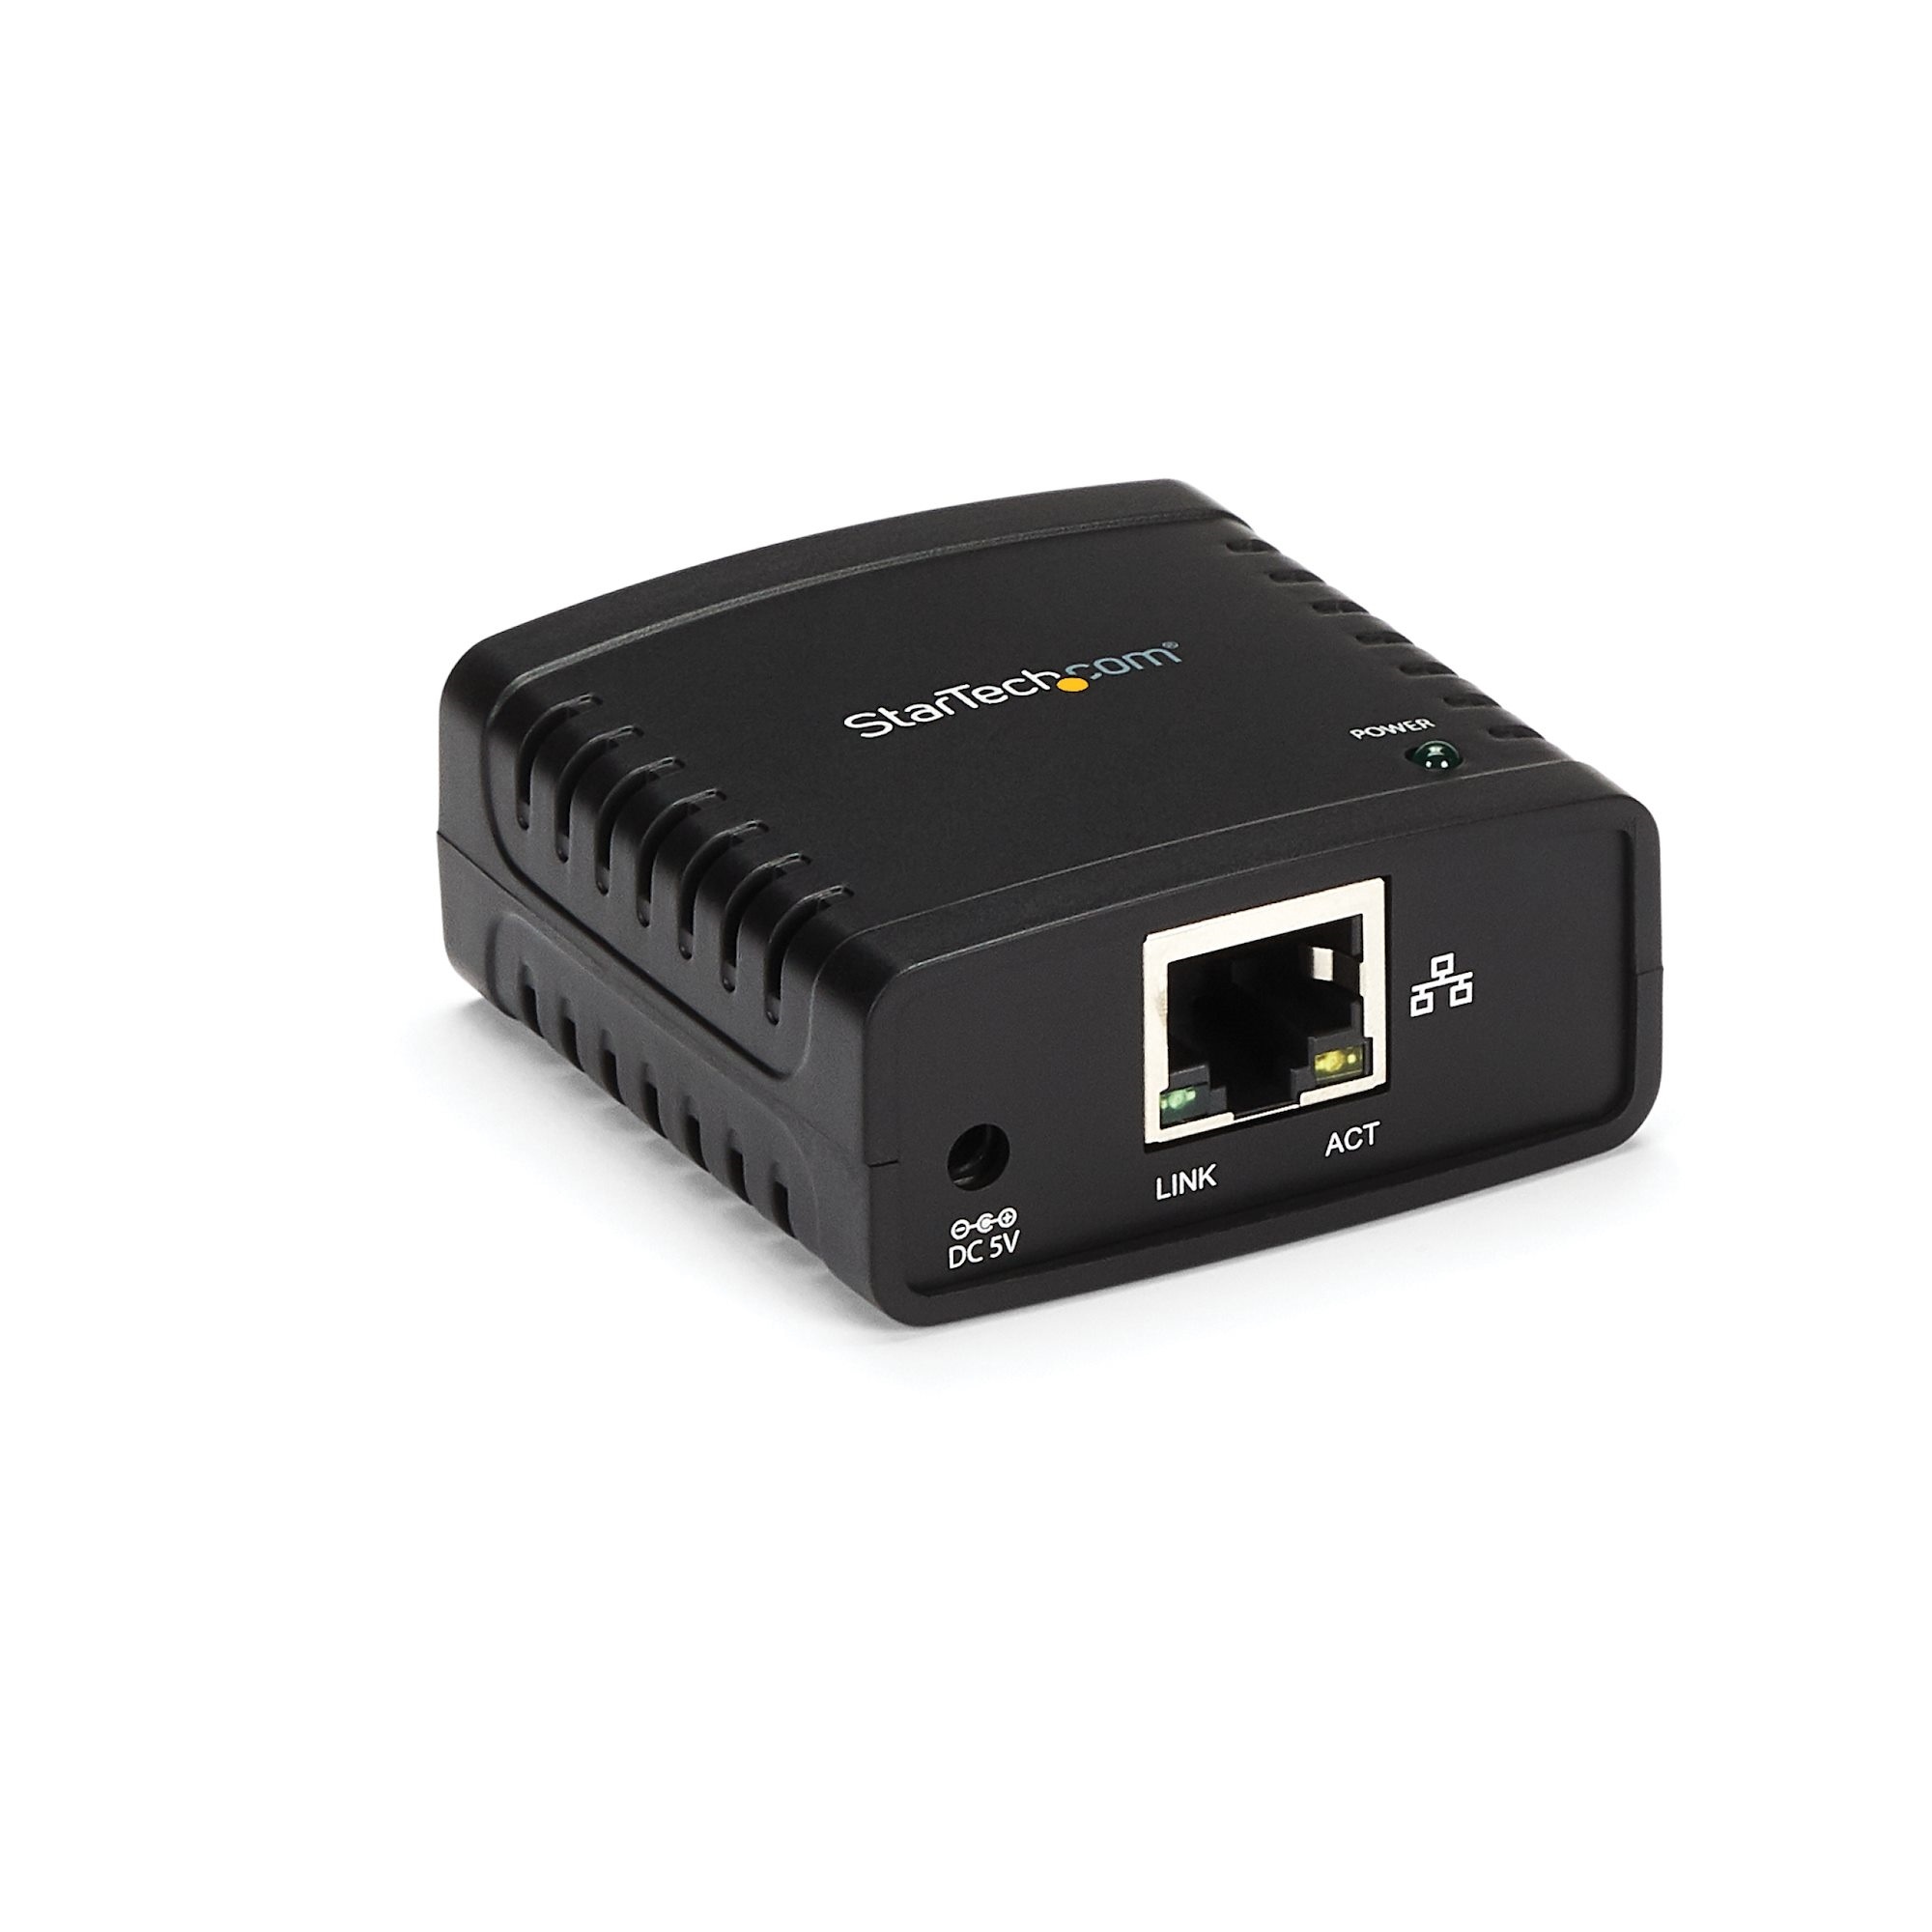 StarTech 10/100Mbps Ethernet to USB 2.0 Network LPR Print Server